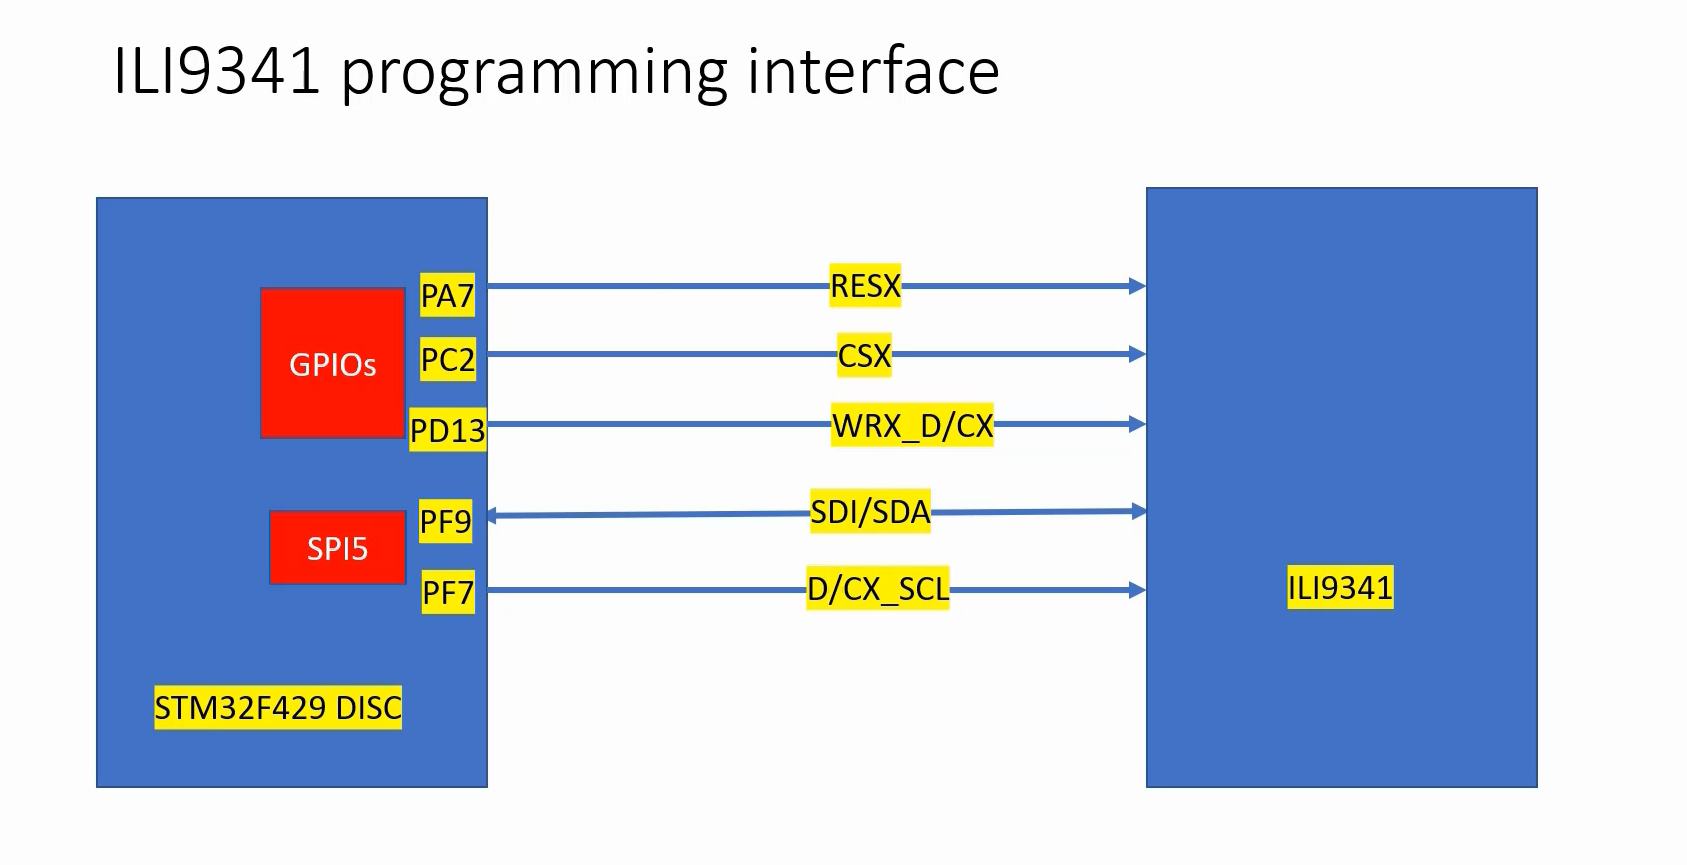 Figure 2. ILI9341 programming interface